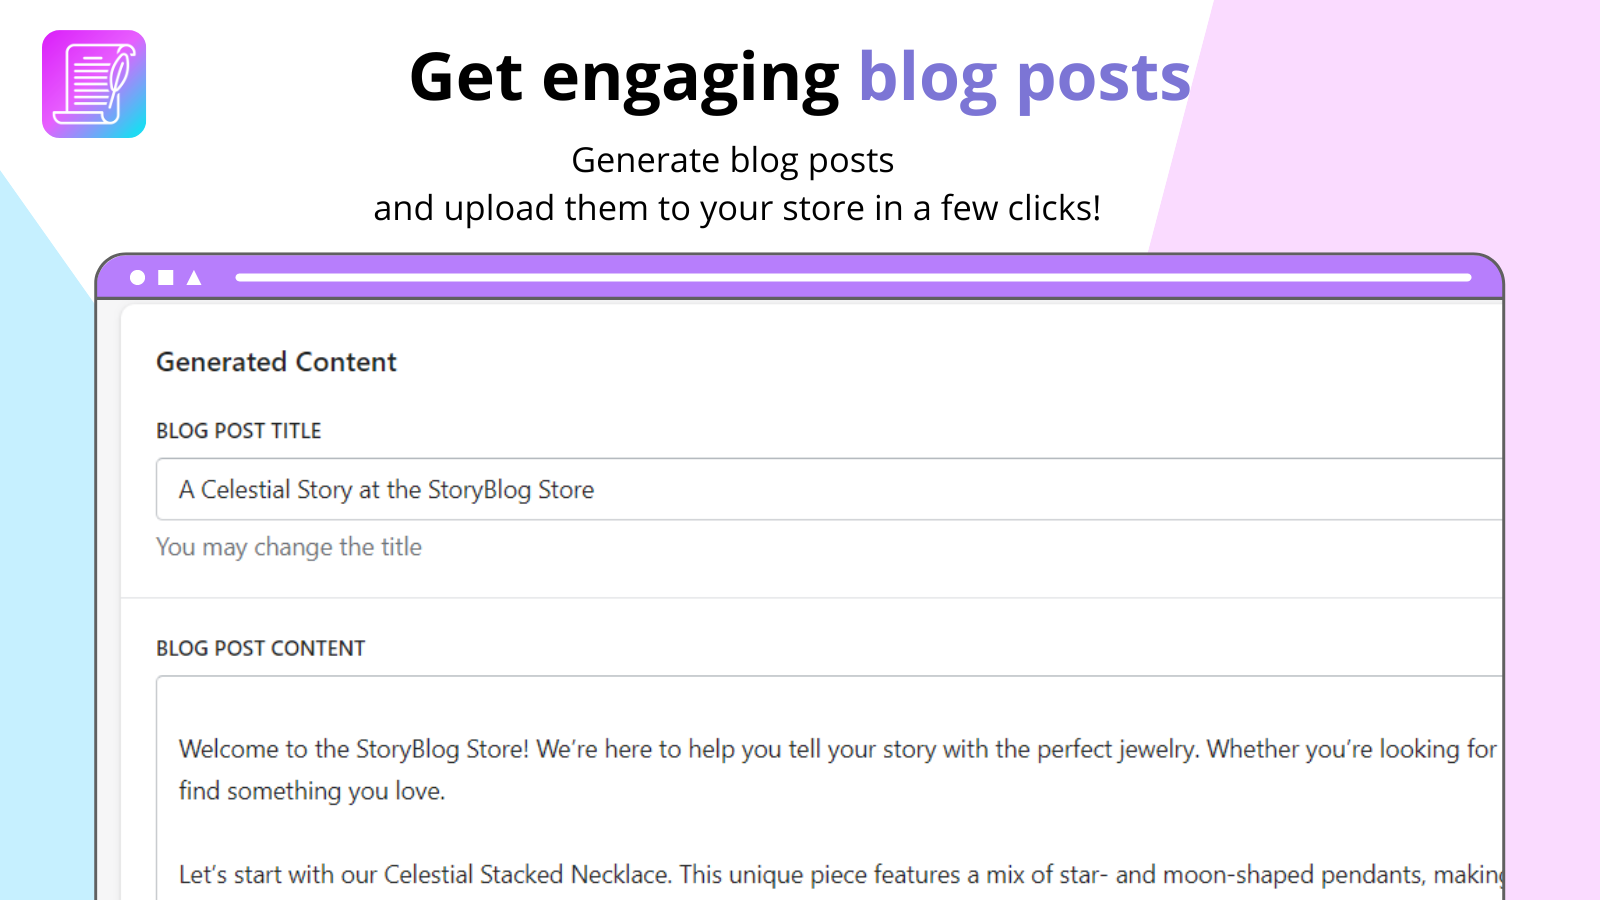 Get engaging blog posts